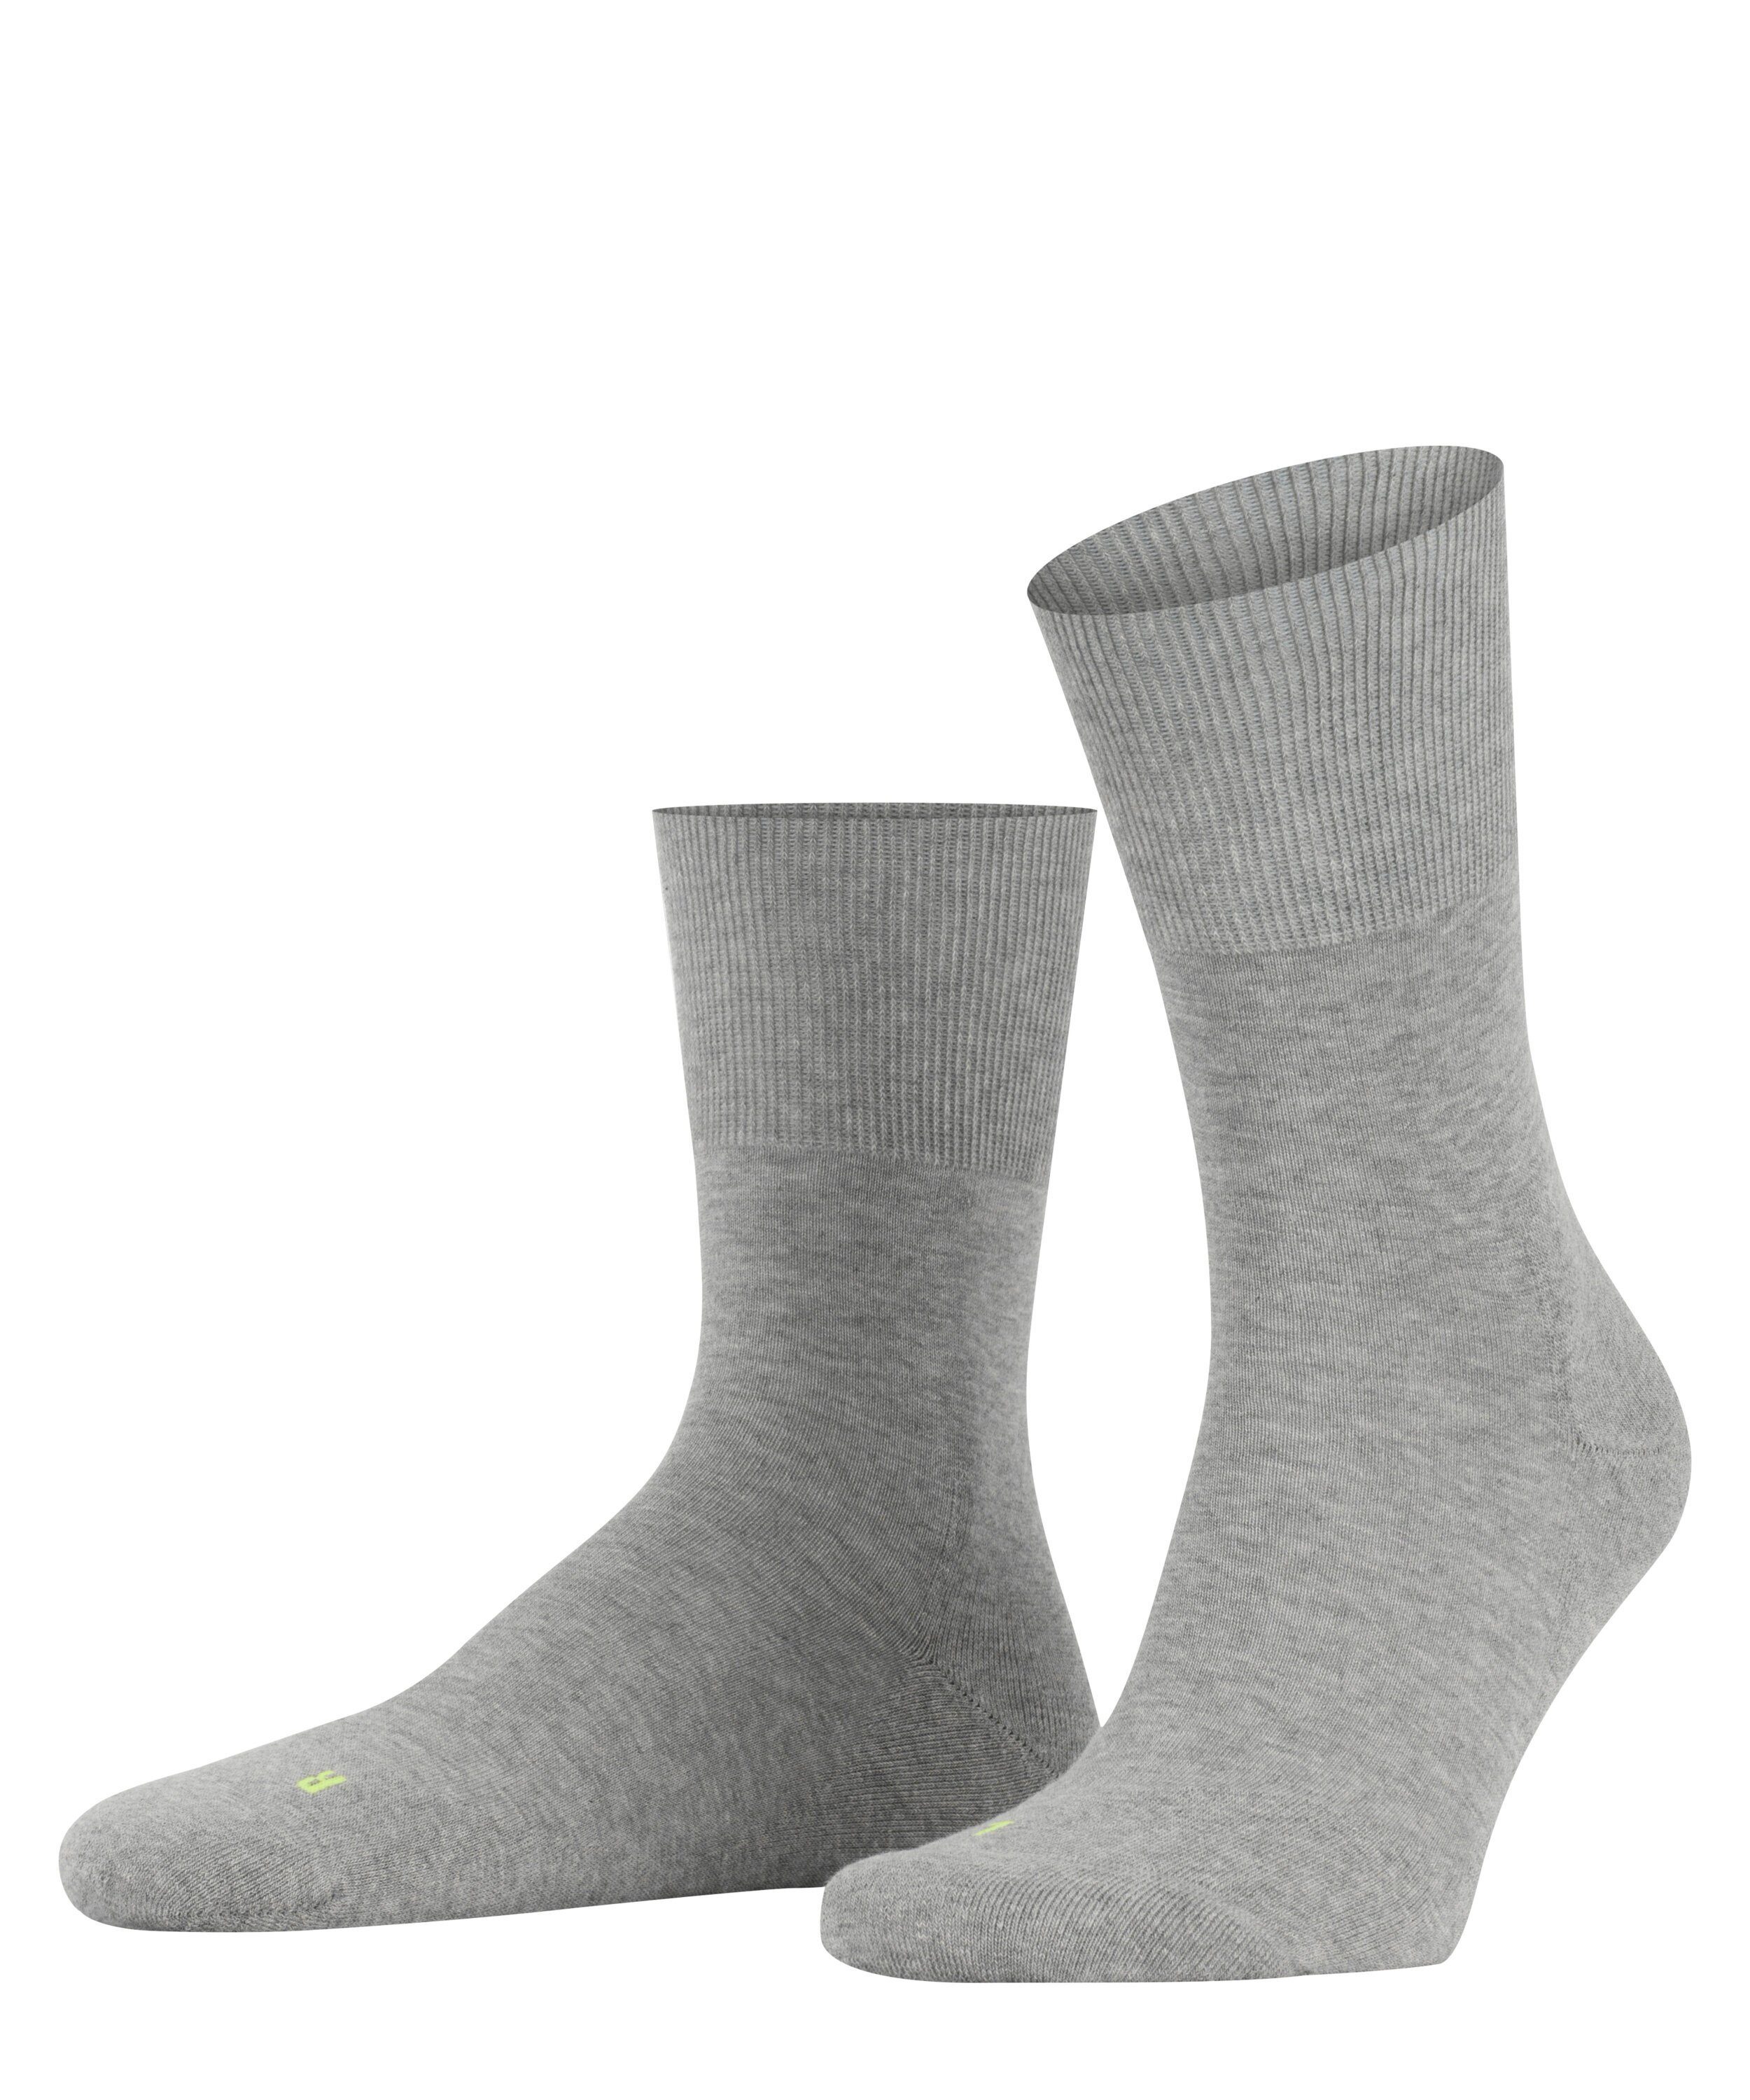 Run (3400) FALKE Socken light (1-Paar) grey